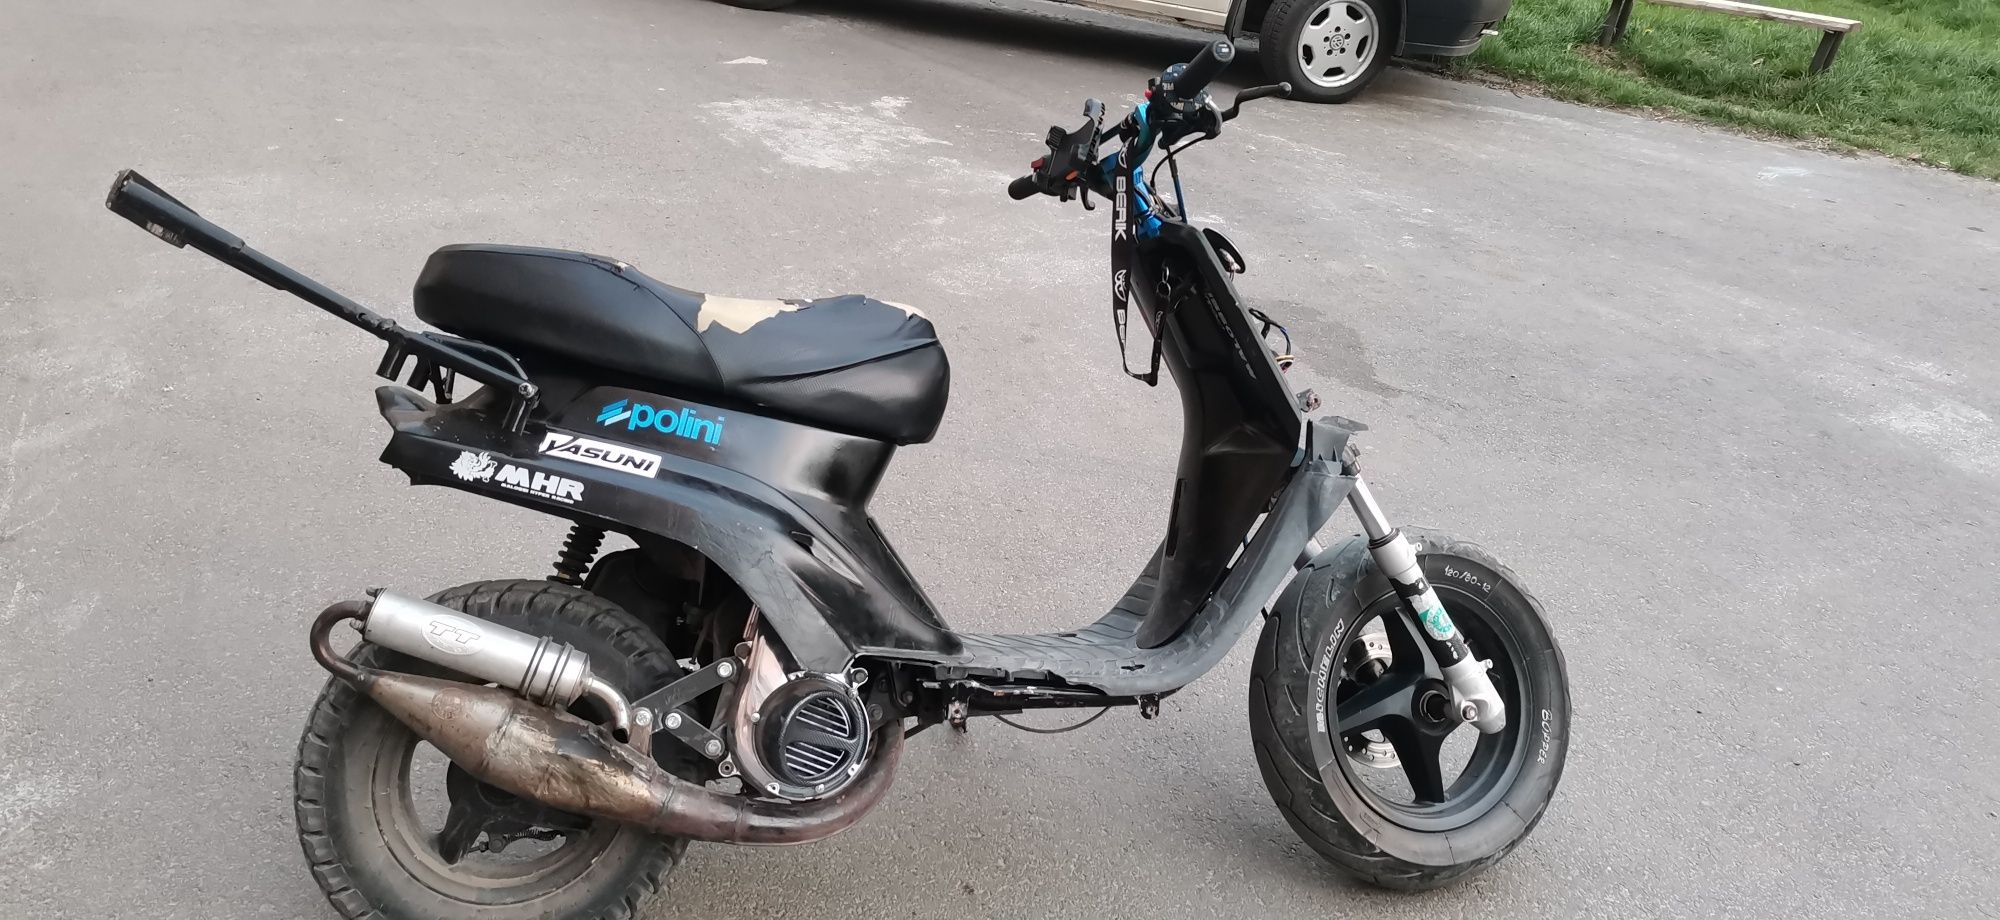 Срочно продам Мопед скутер Yamaha bws бвс (не slider, aerox)